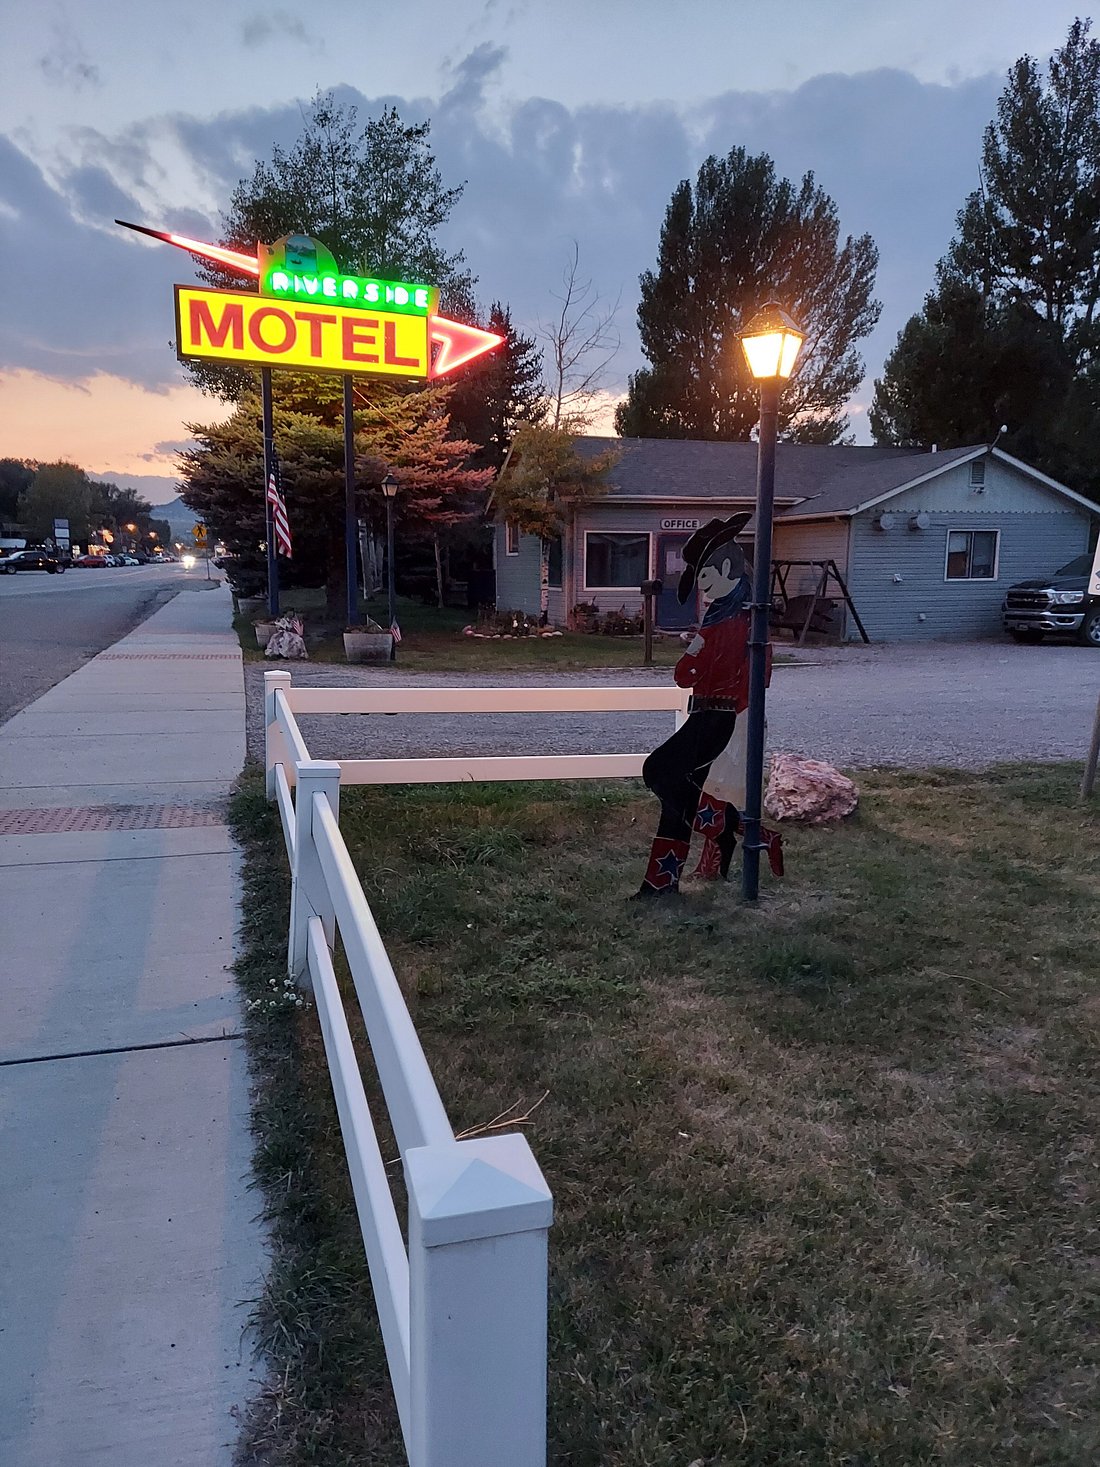 Riverside Motel - Ennis, Montana